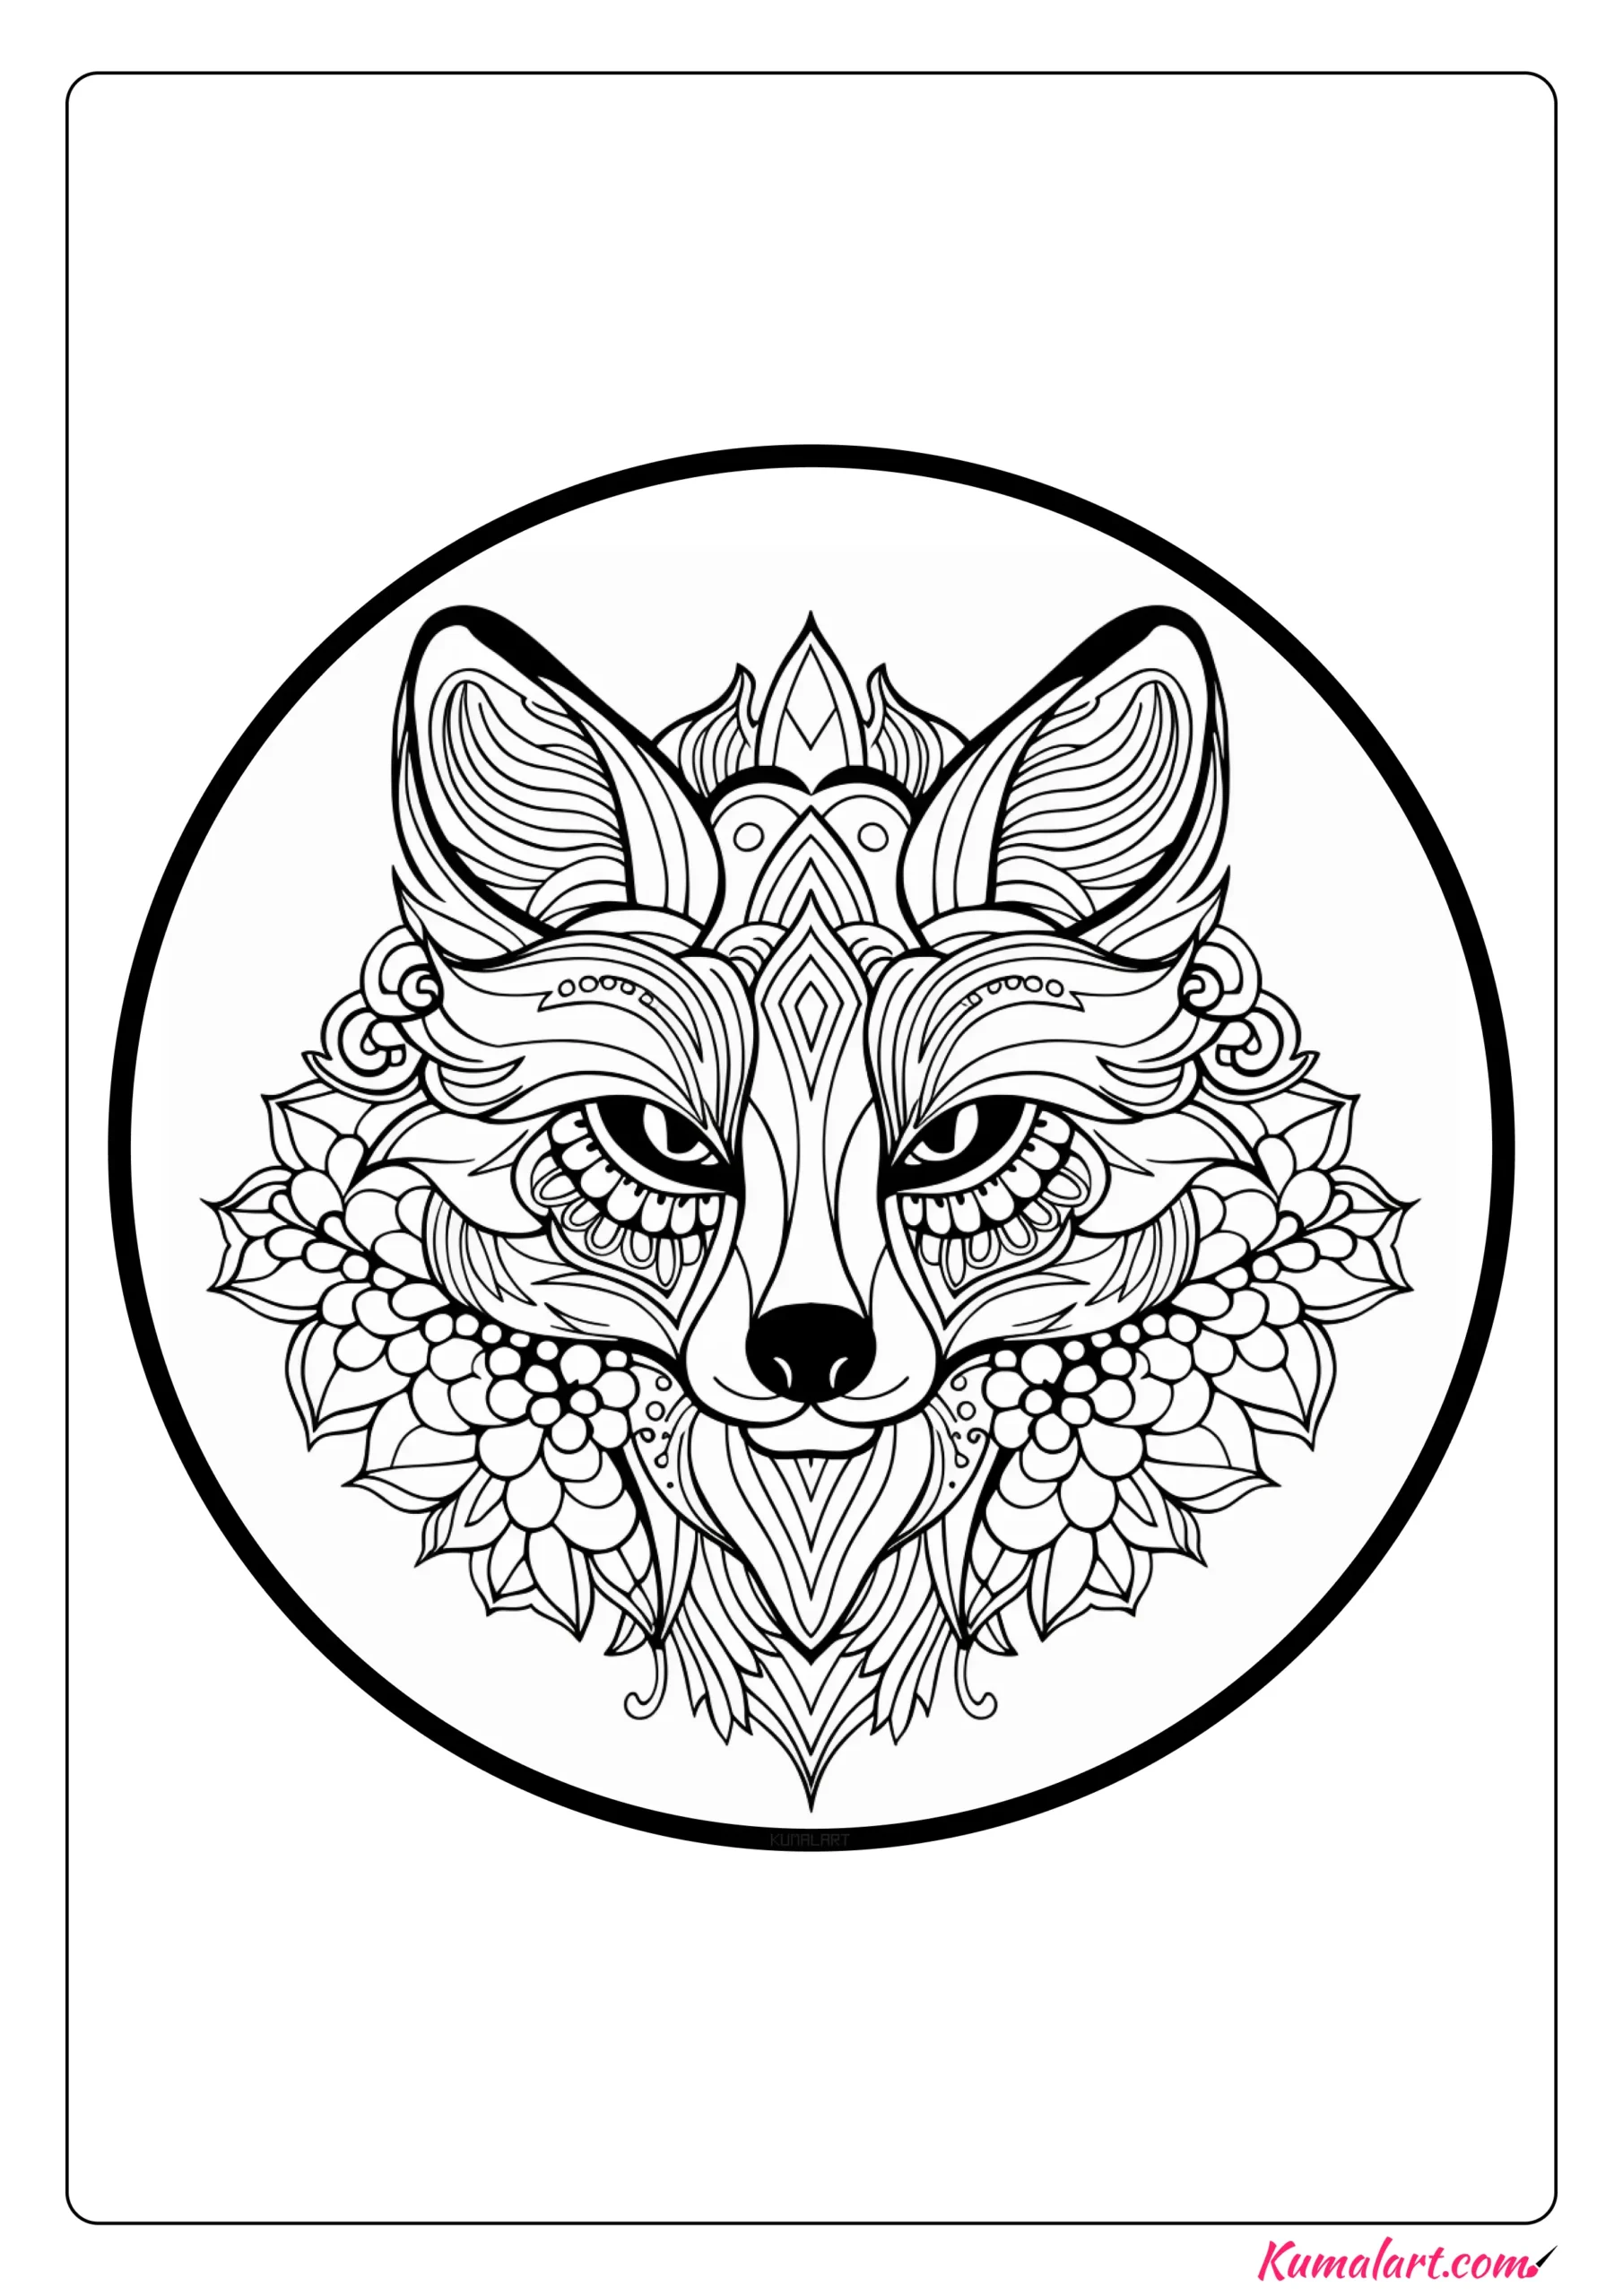 Rocky the Fox Mandala Coloring Page